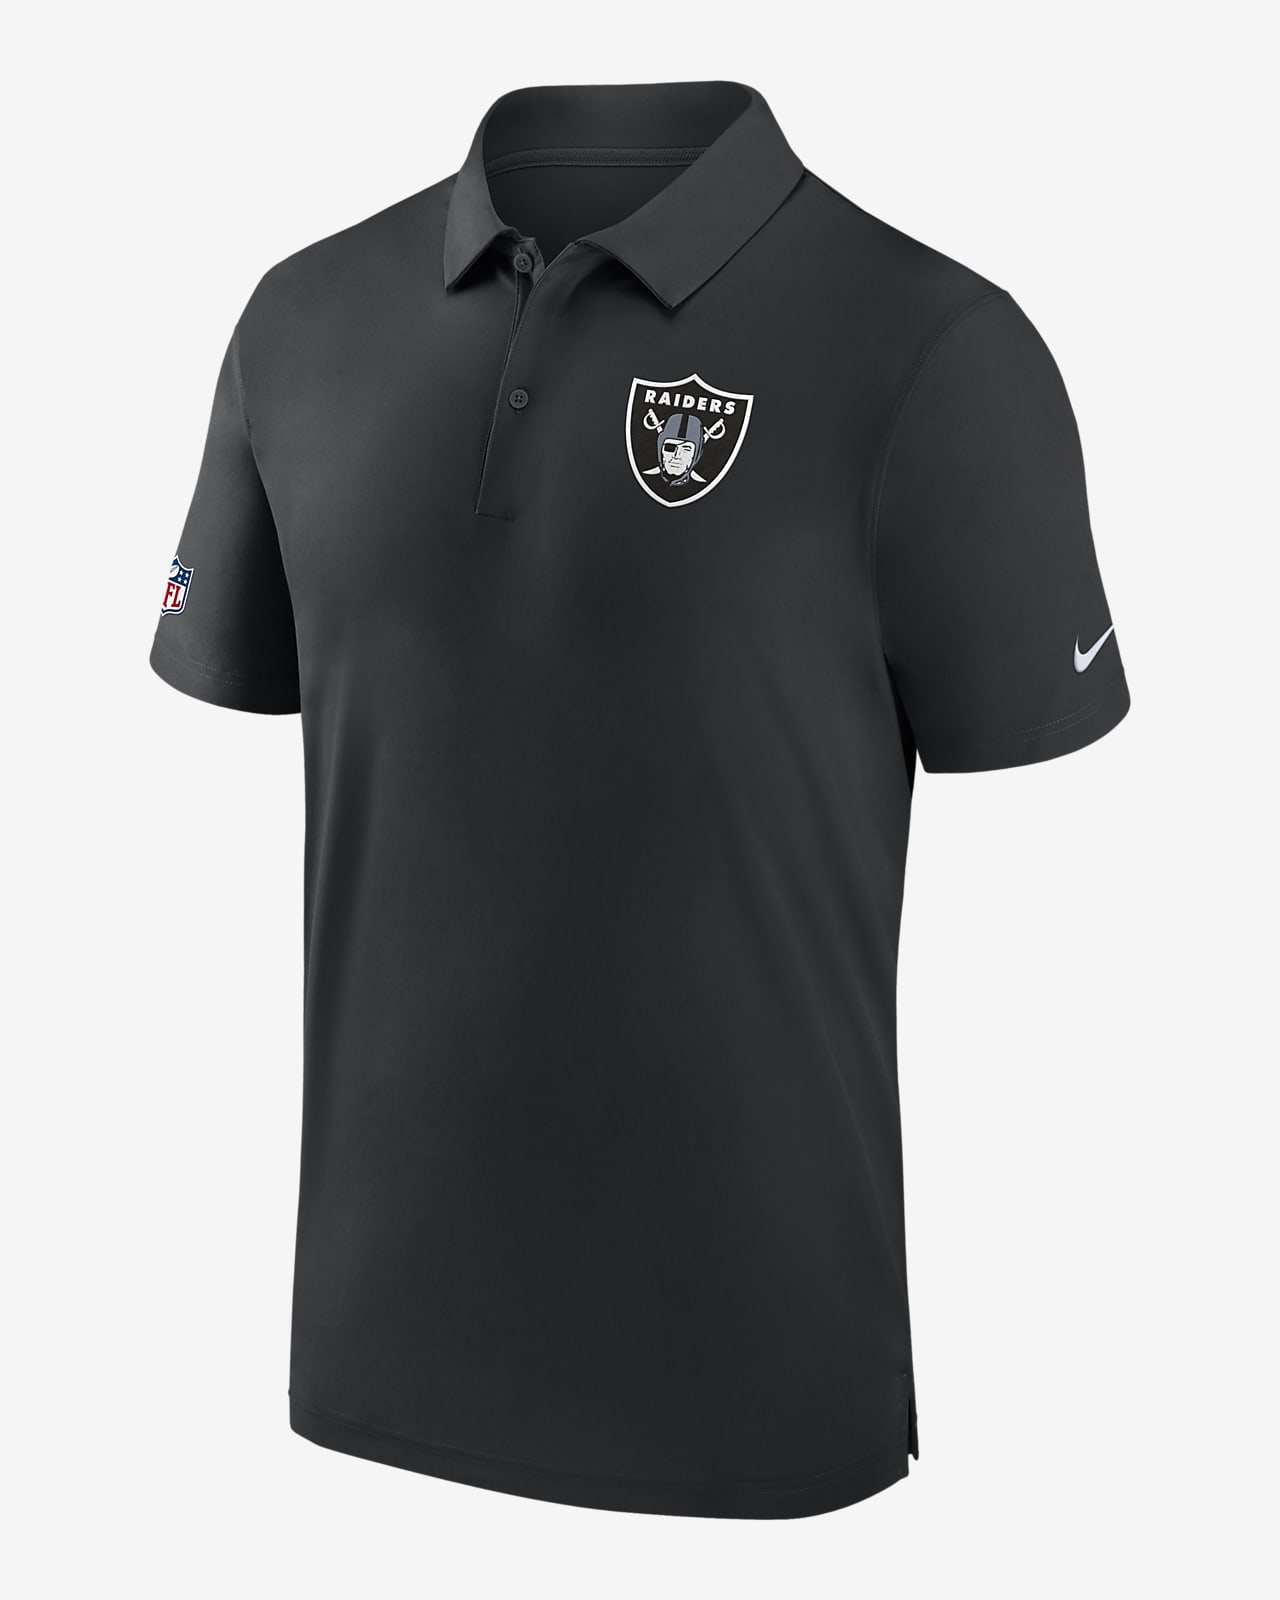 Las Vegas Raiders Sideline Coach Men’s Nike Dri-FIT NFL Polo